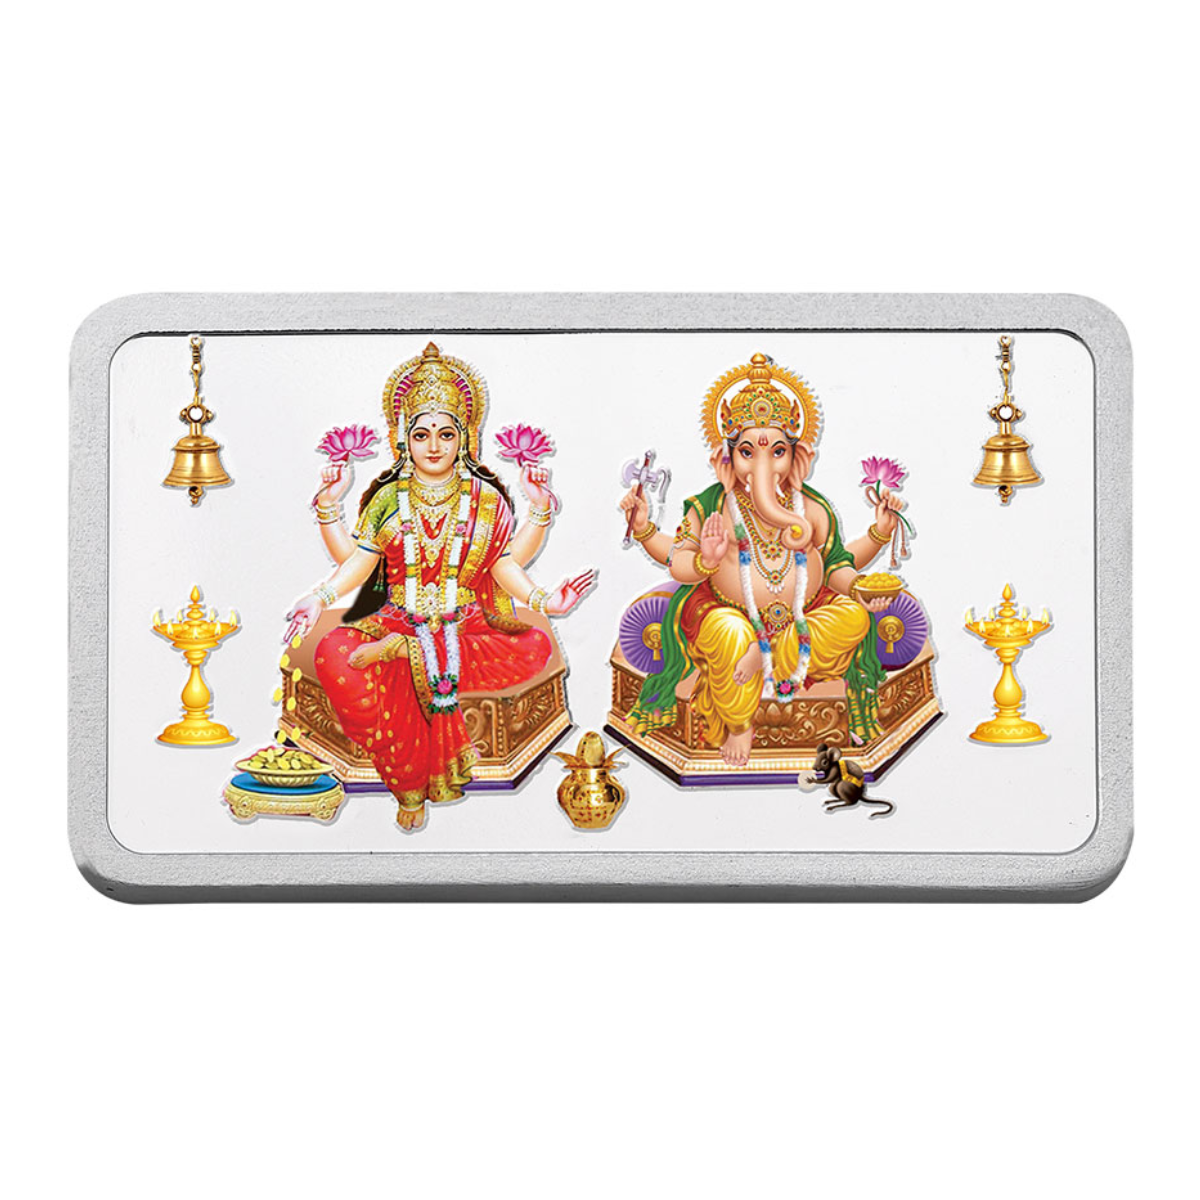 100 gm (999.9) Lakshmi Ganesha Silver Colour Bar-Kundan